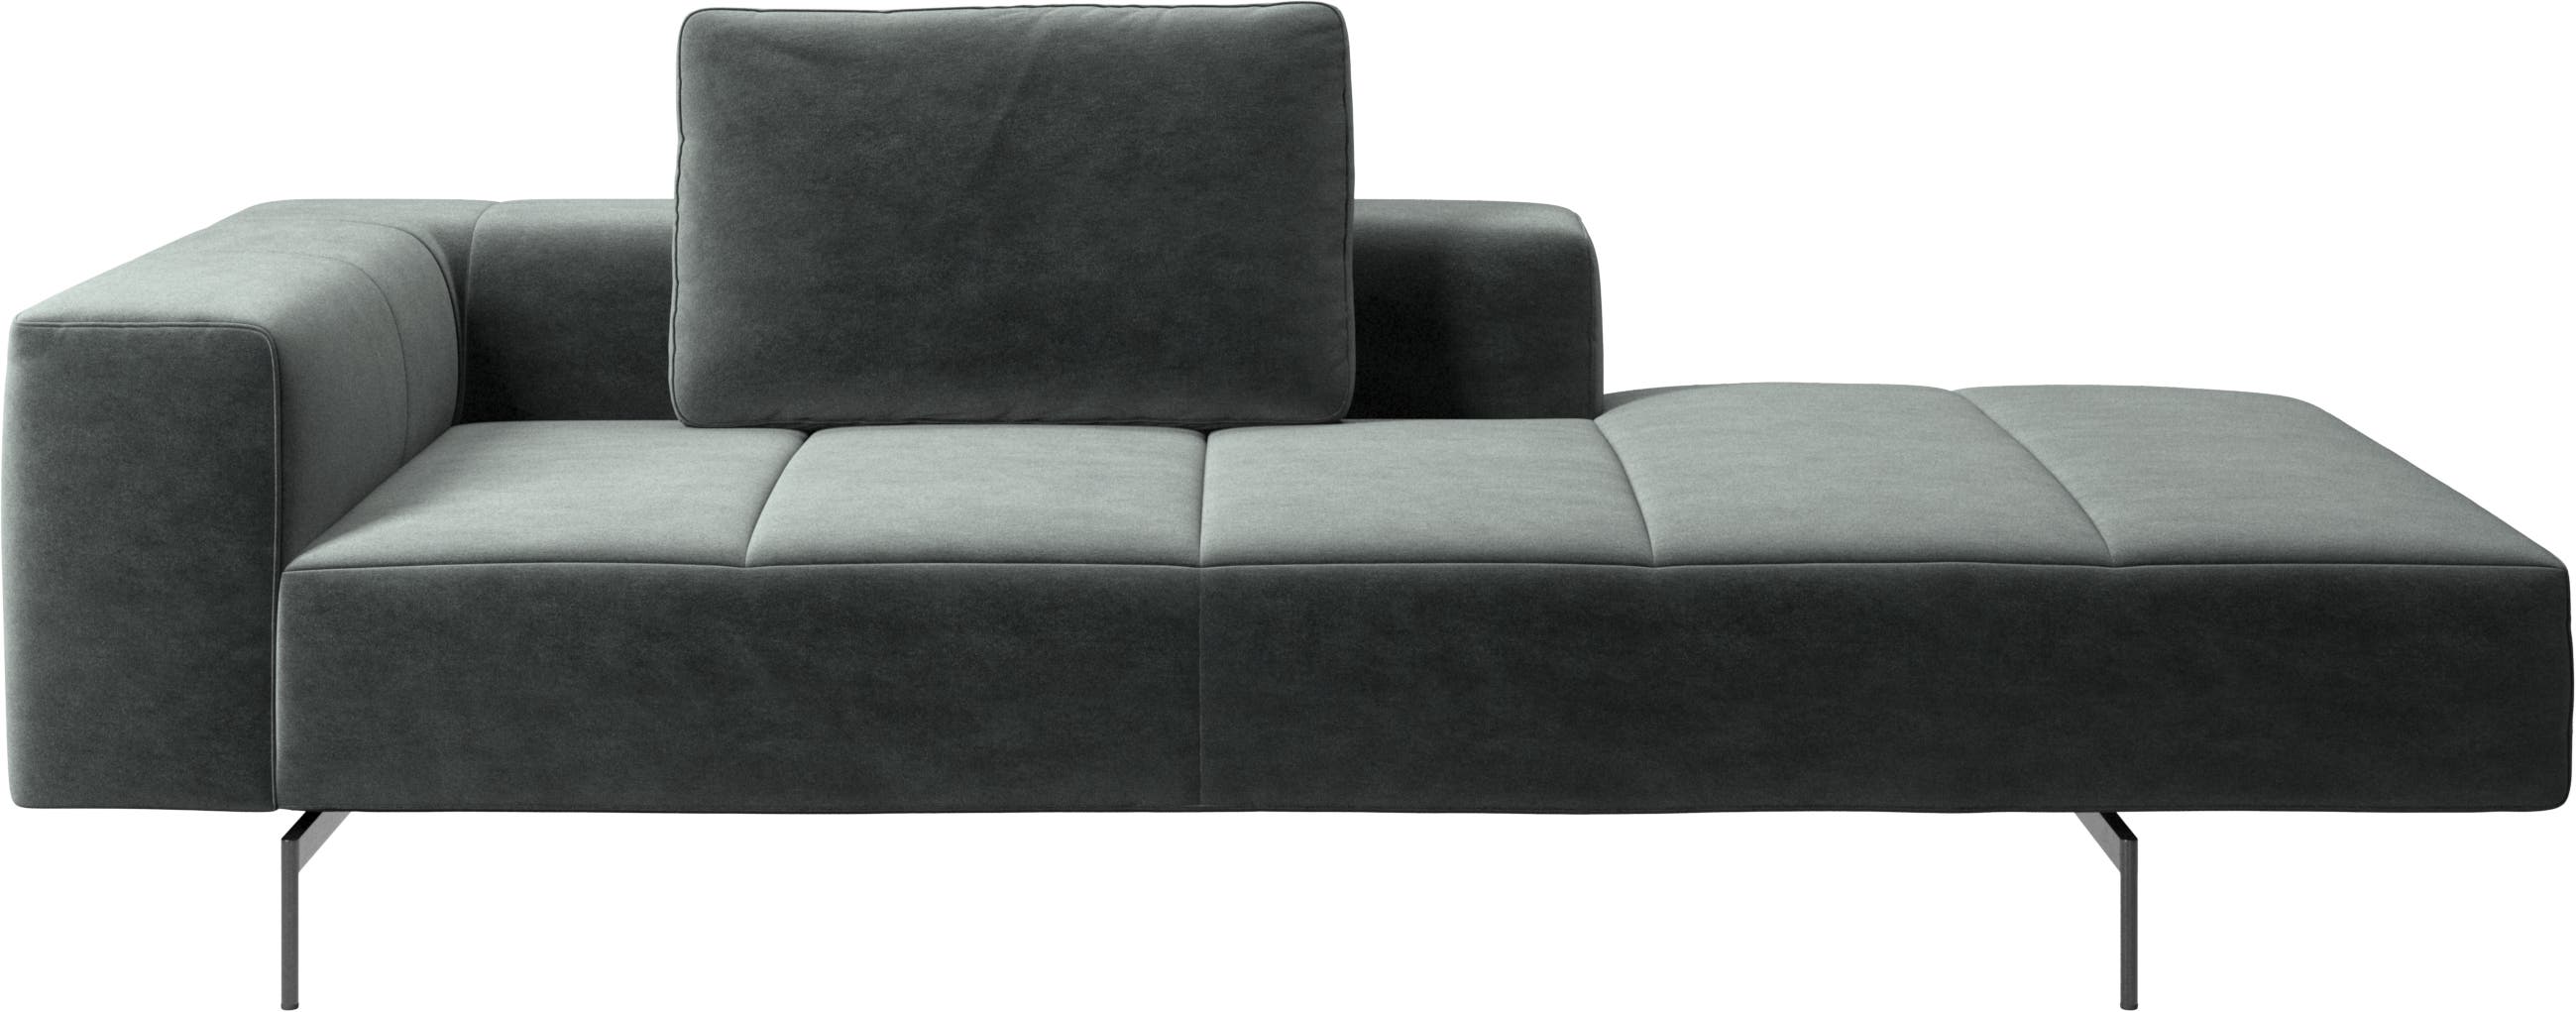 Amsterdam módulo lounge para sofá, apoio de braço á esquerda, aberto á direita